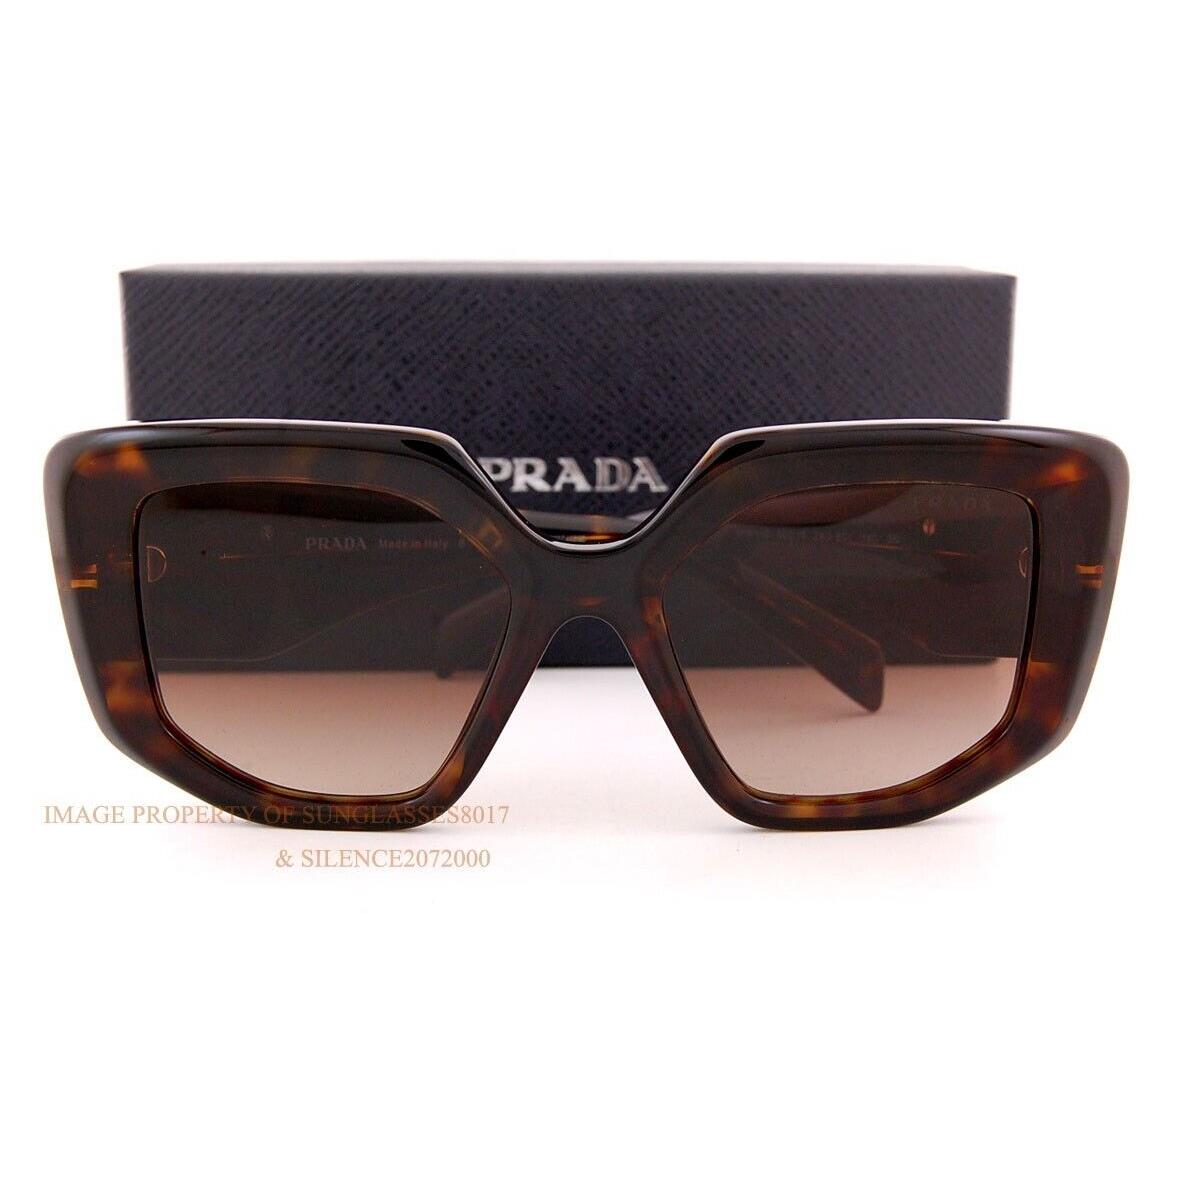 Prada sunglasses  - Havana Frame, Brown Lens 0